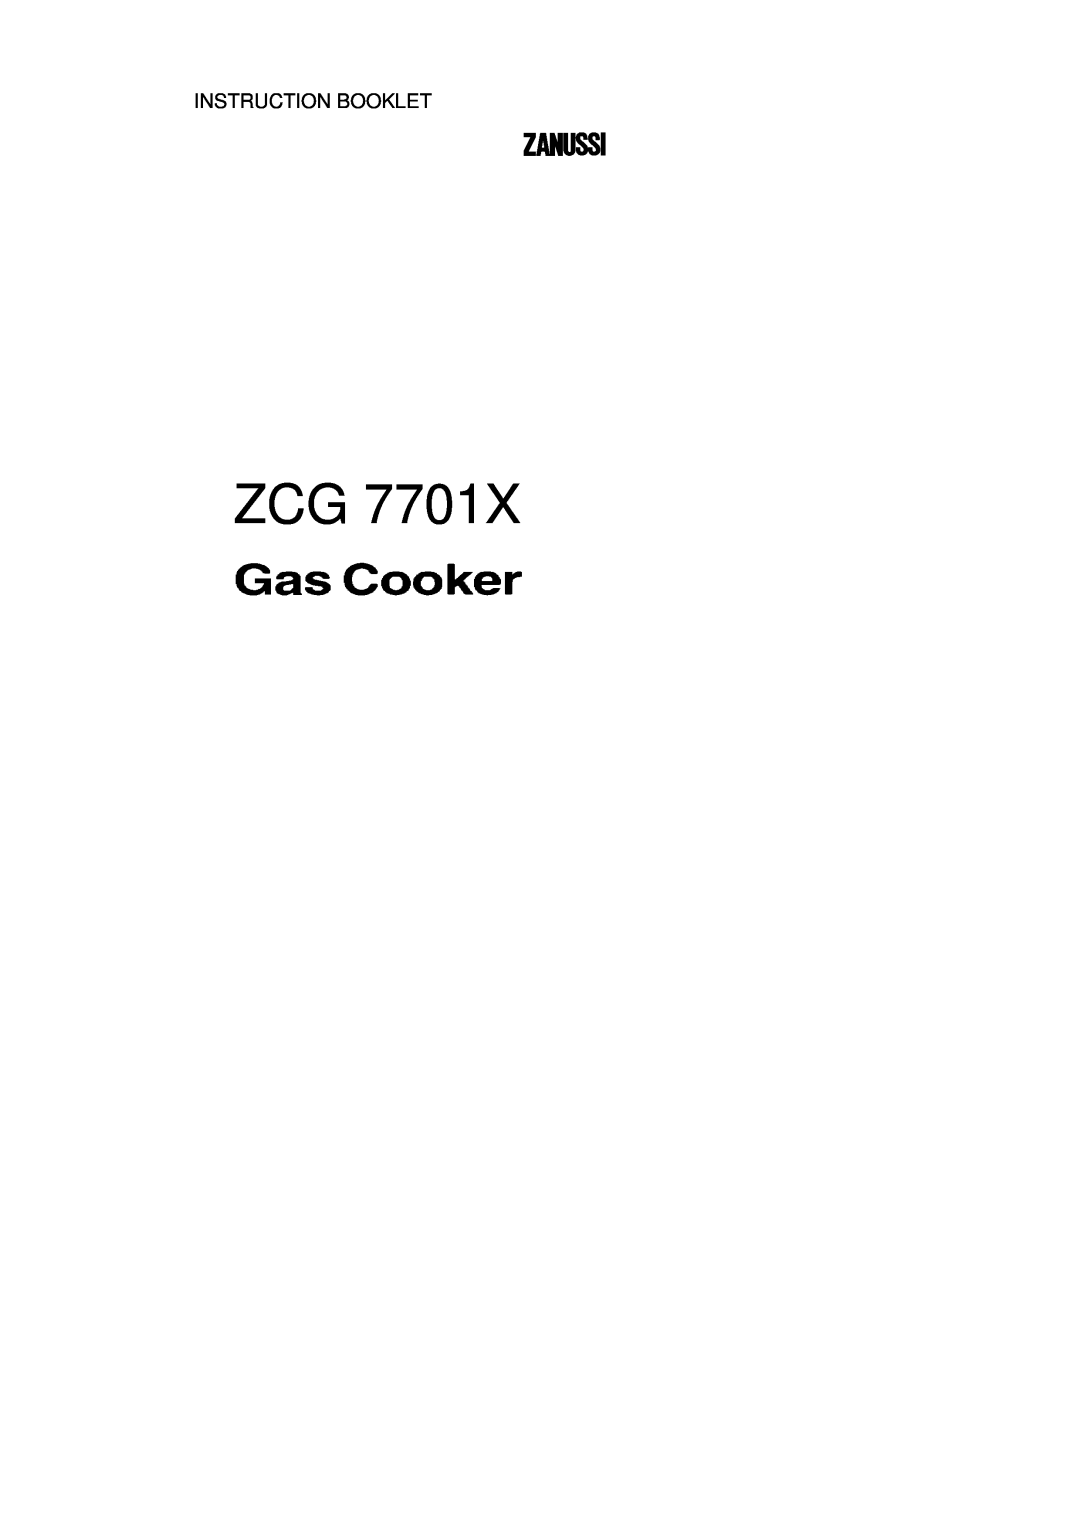 Zanussi ZCG 7701X manual Instruction Booklet 